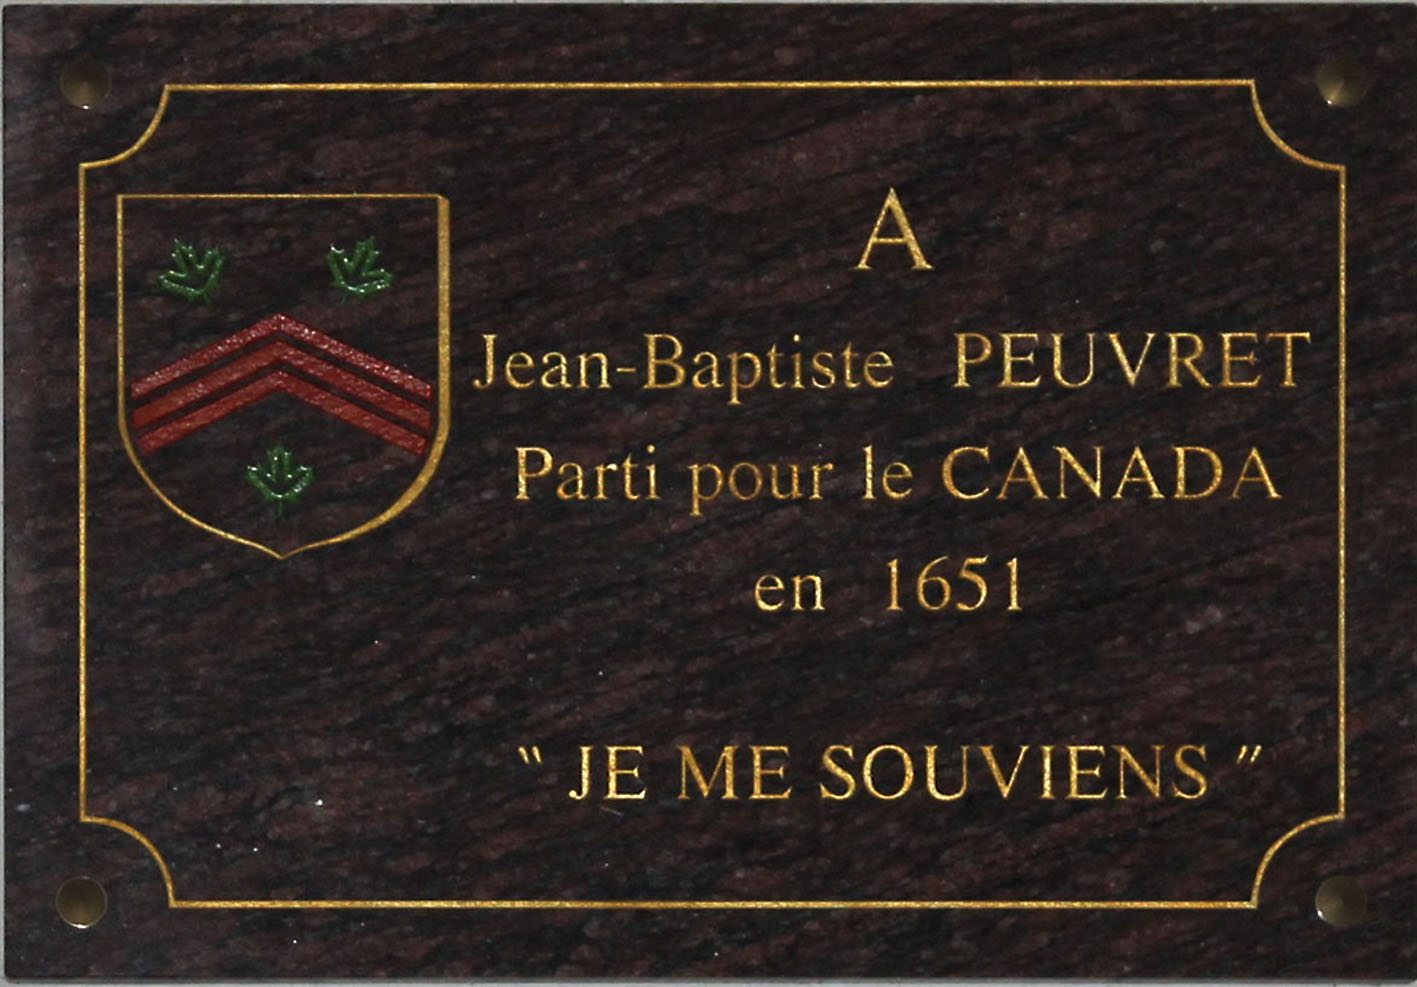 Commemorative plaque in Belleme